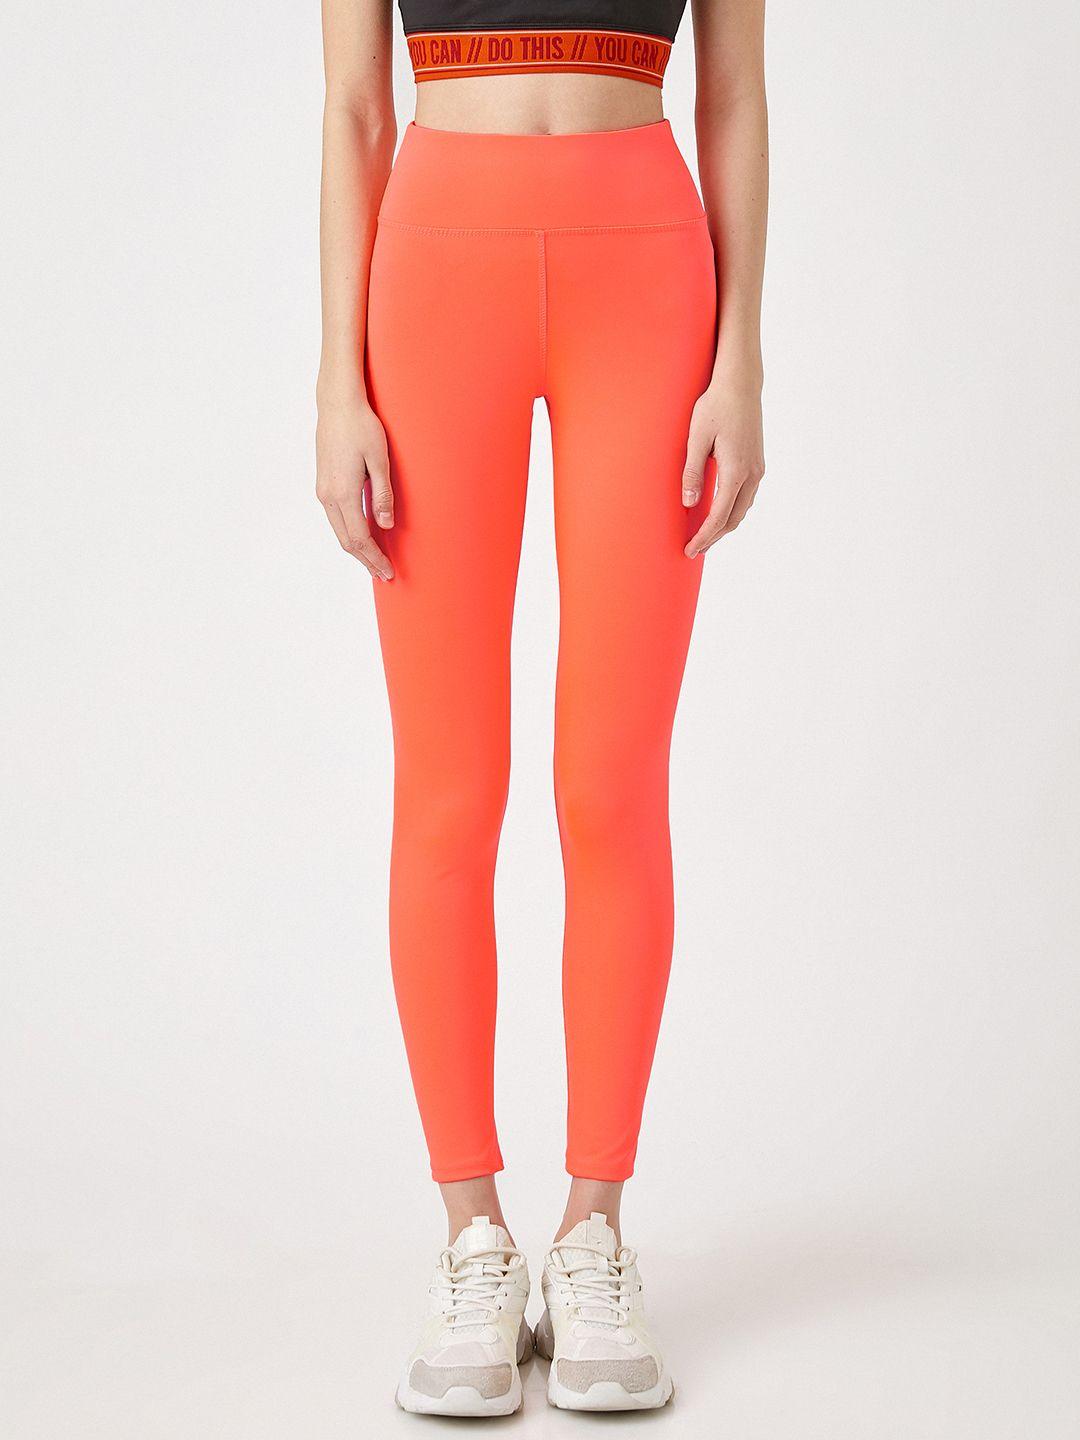 koton-women-neon-orange-solid-ankle-length-tights